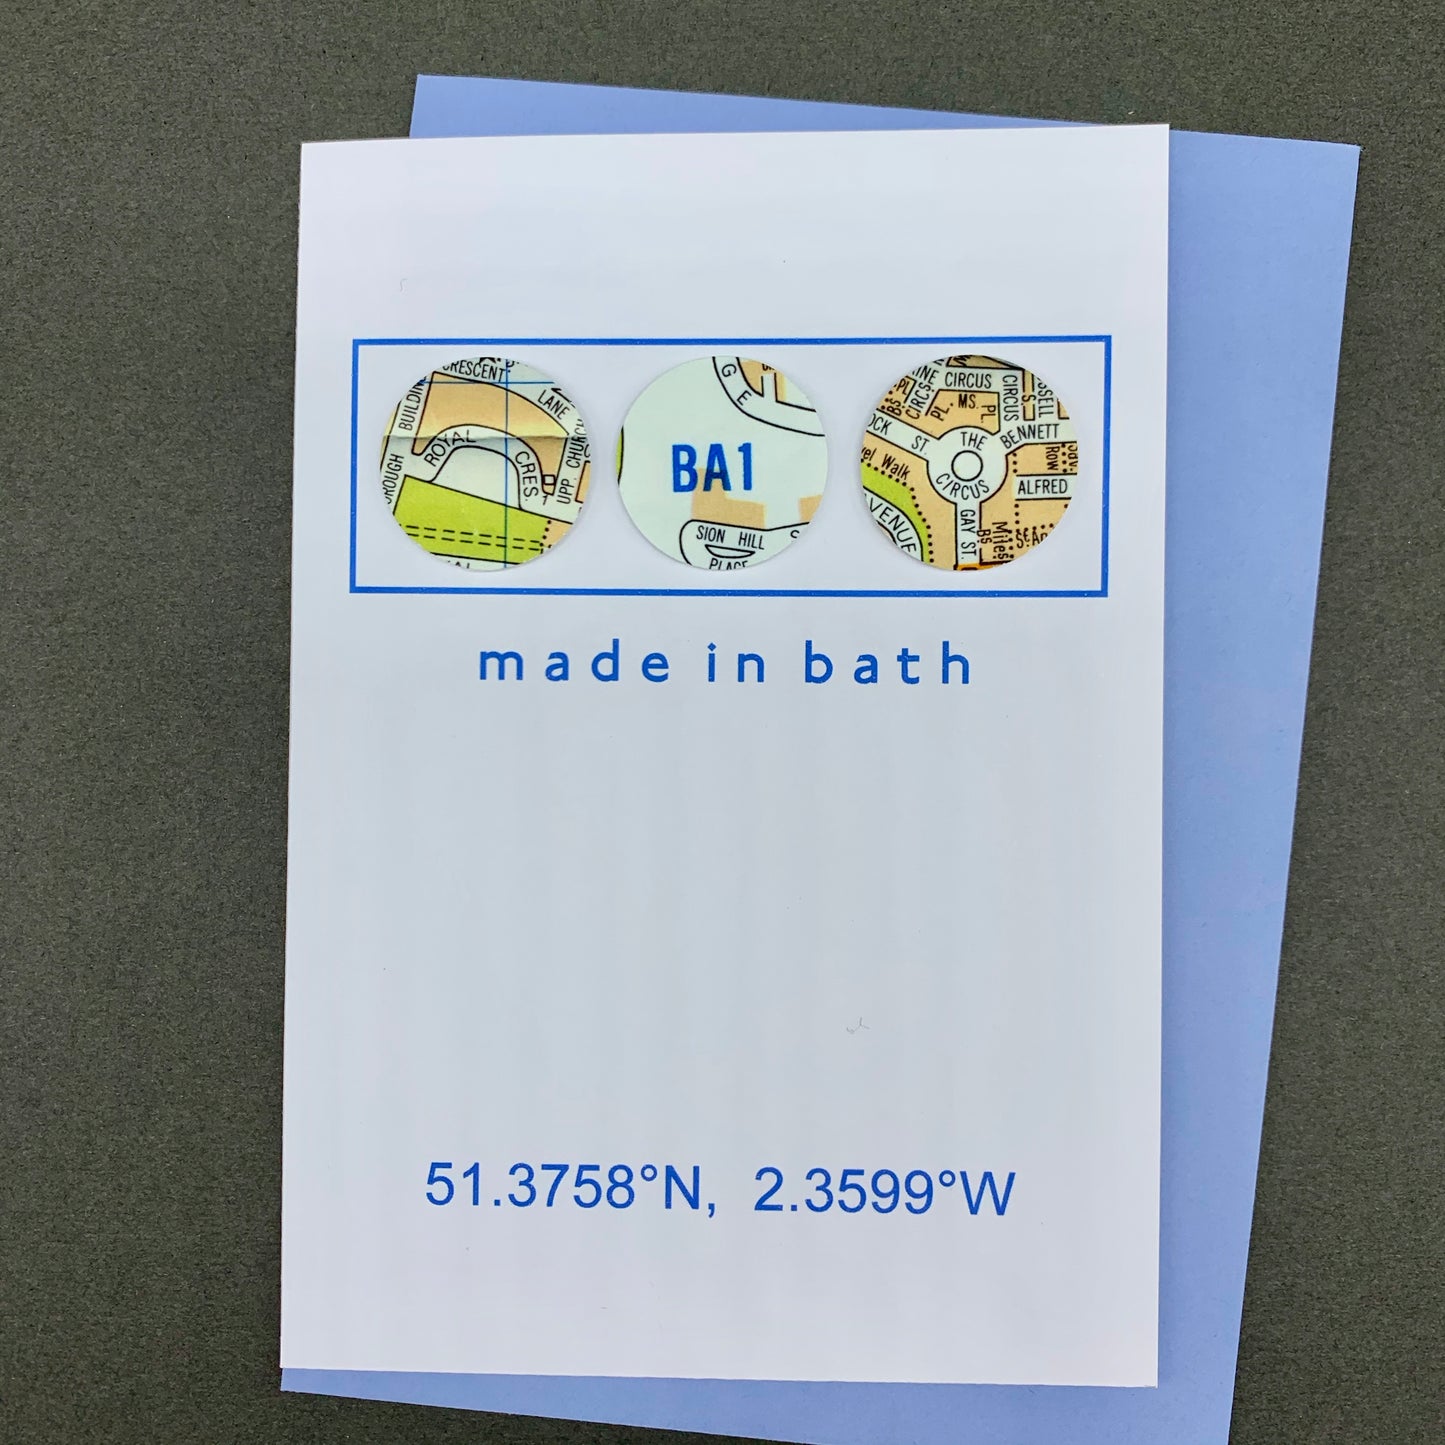 Made in Bath (Co-ordinates)